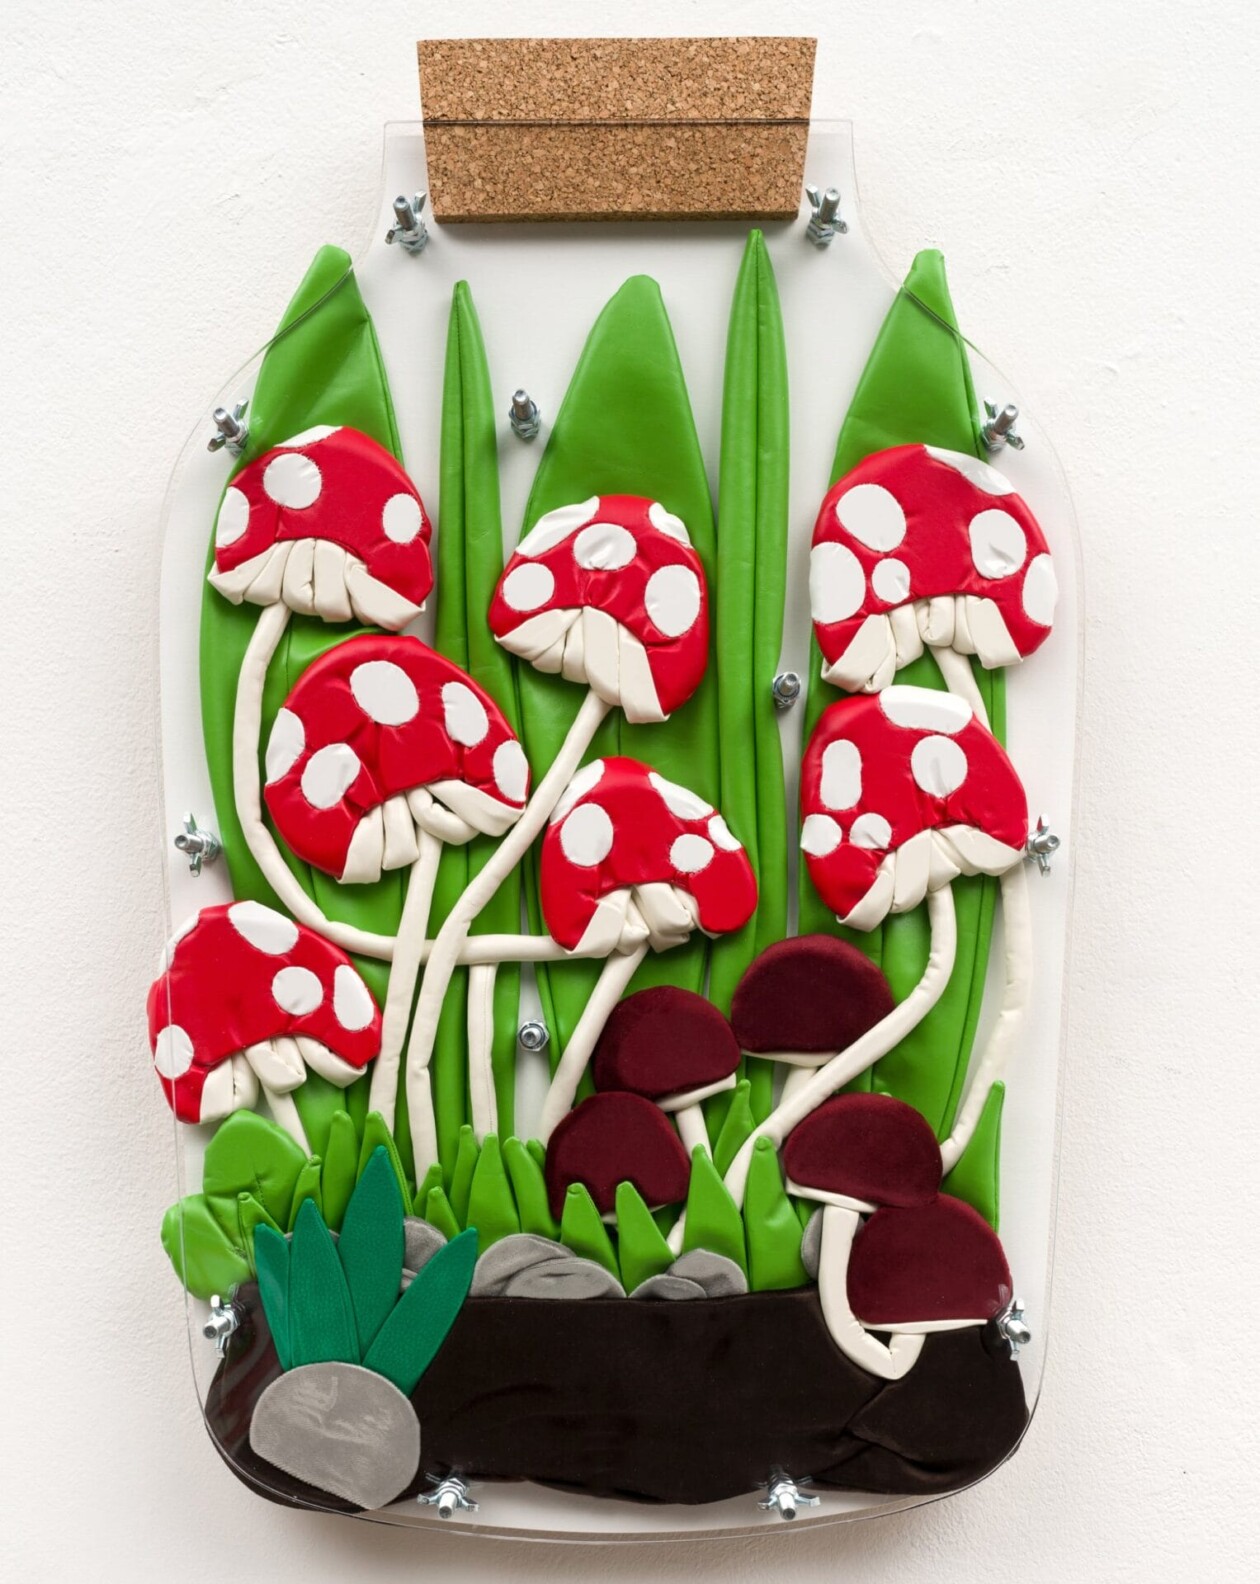 Claustrophobic, Acrylic Pressed Textile Plant Sculptures By Ant Hamlyn (9)